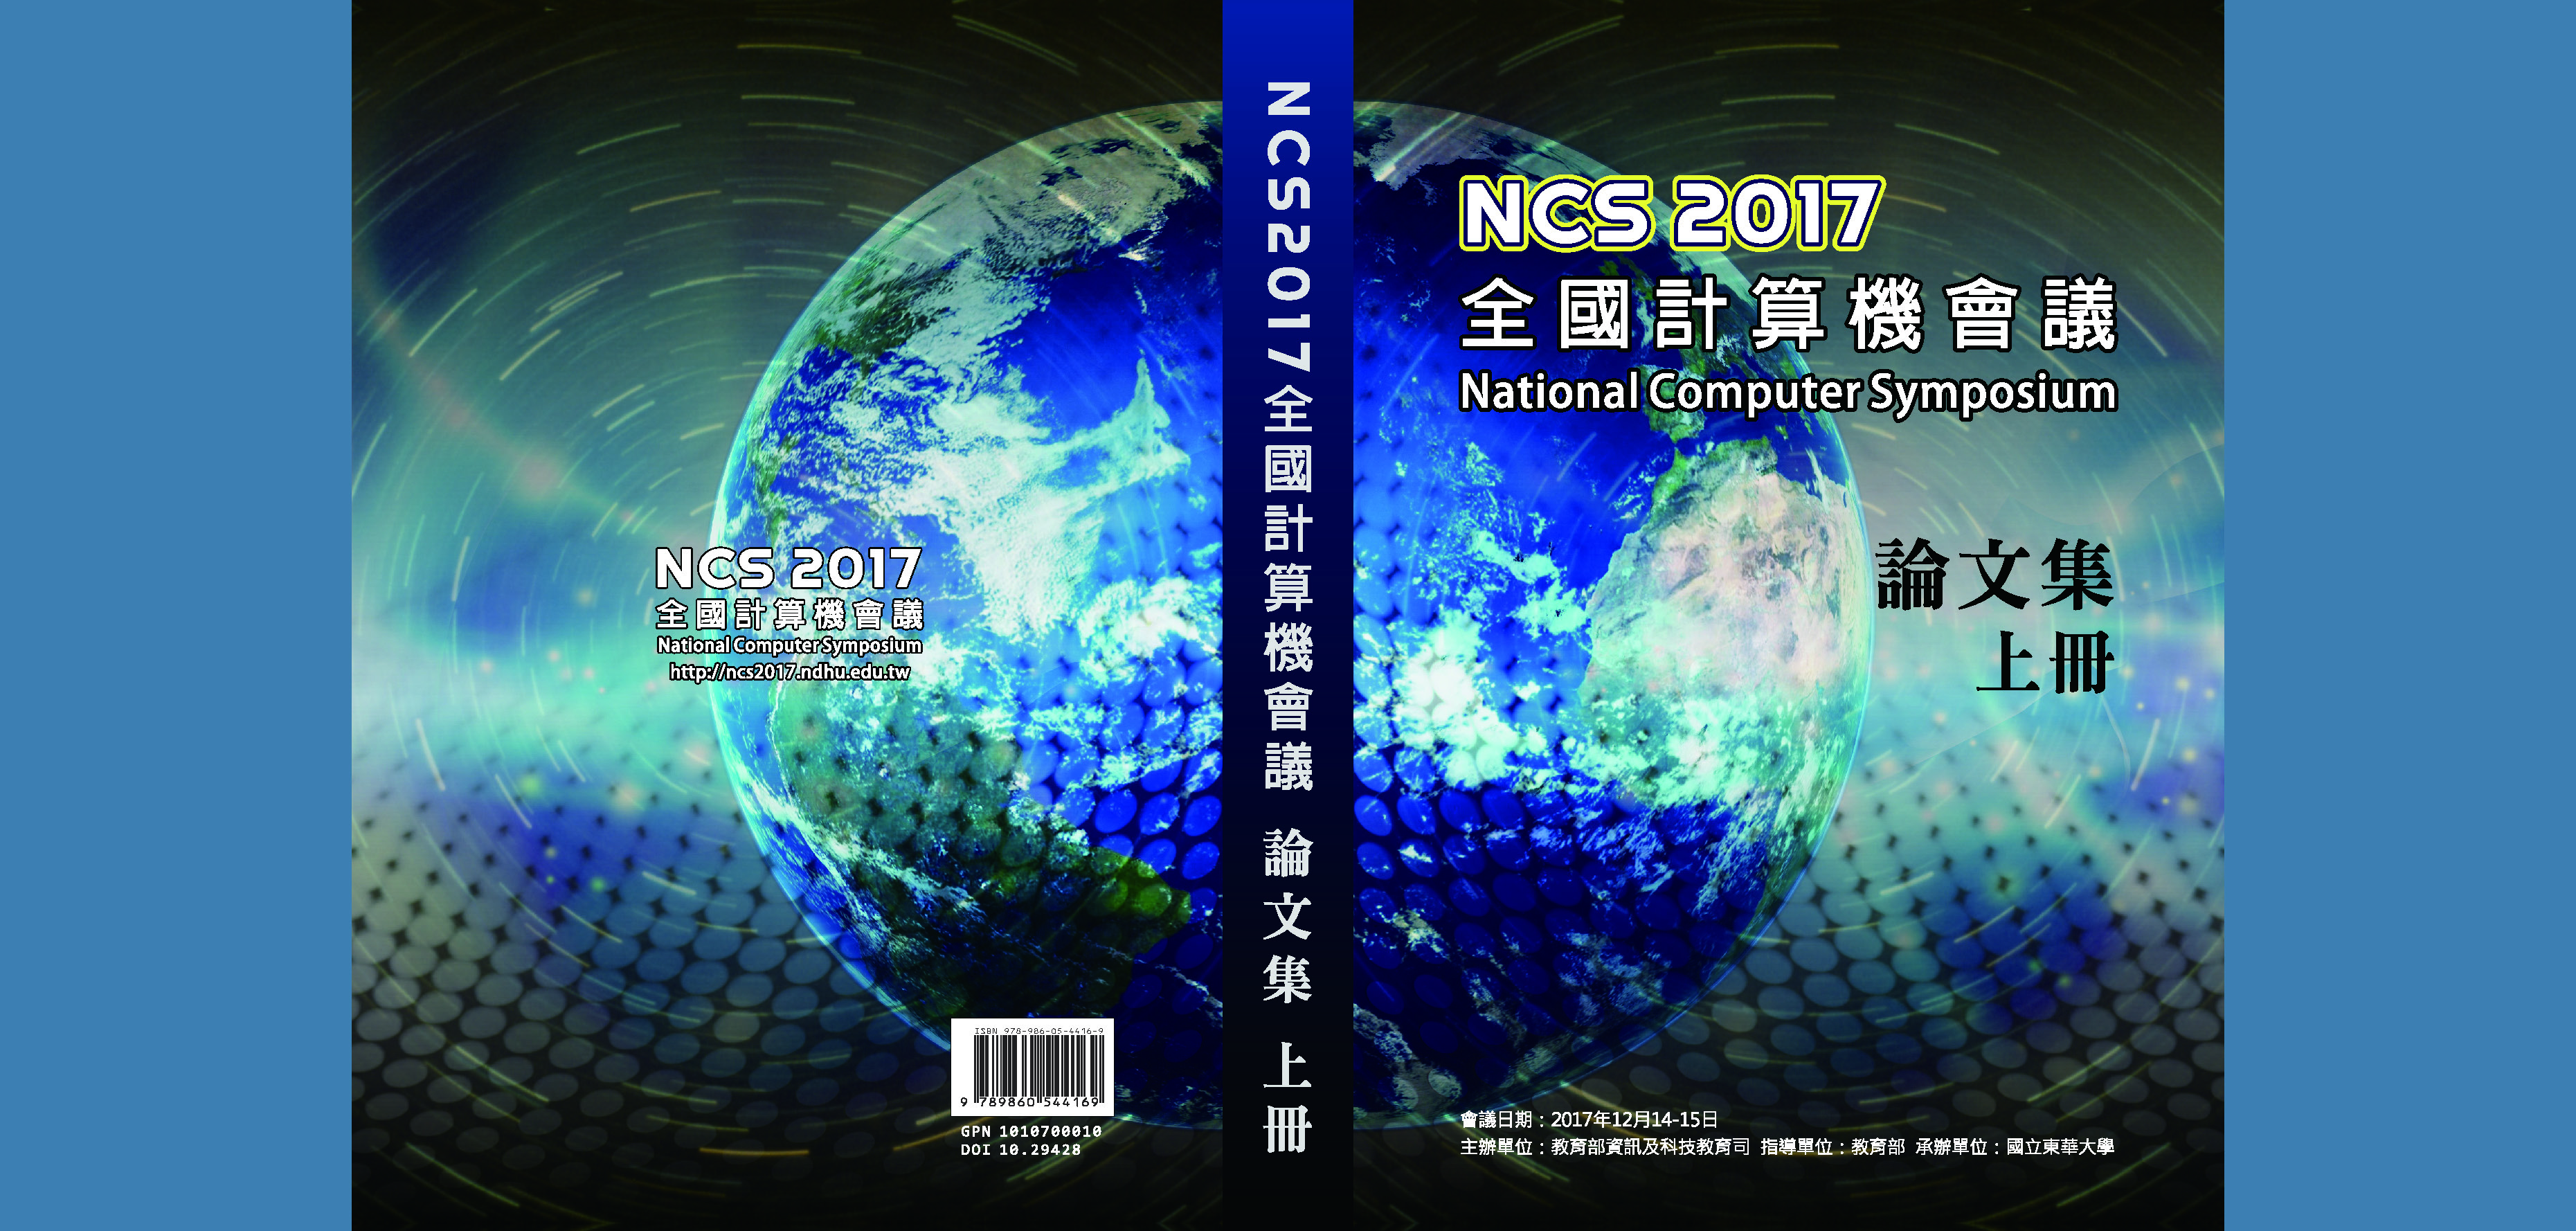 NCS 2017 全國計算機會議(National Computer Symposium)論文集